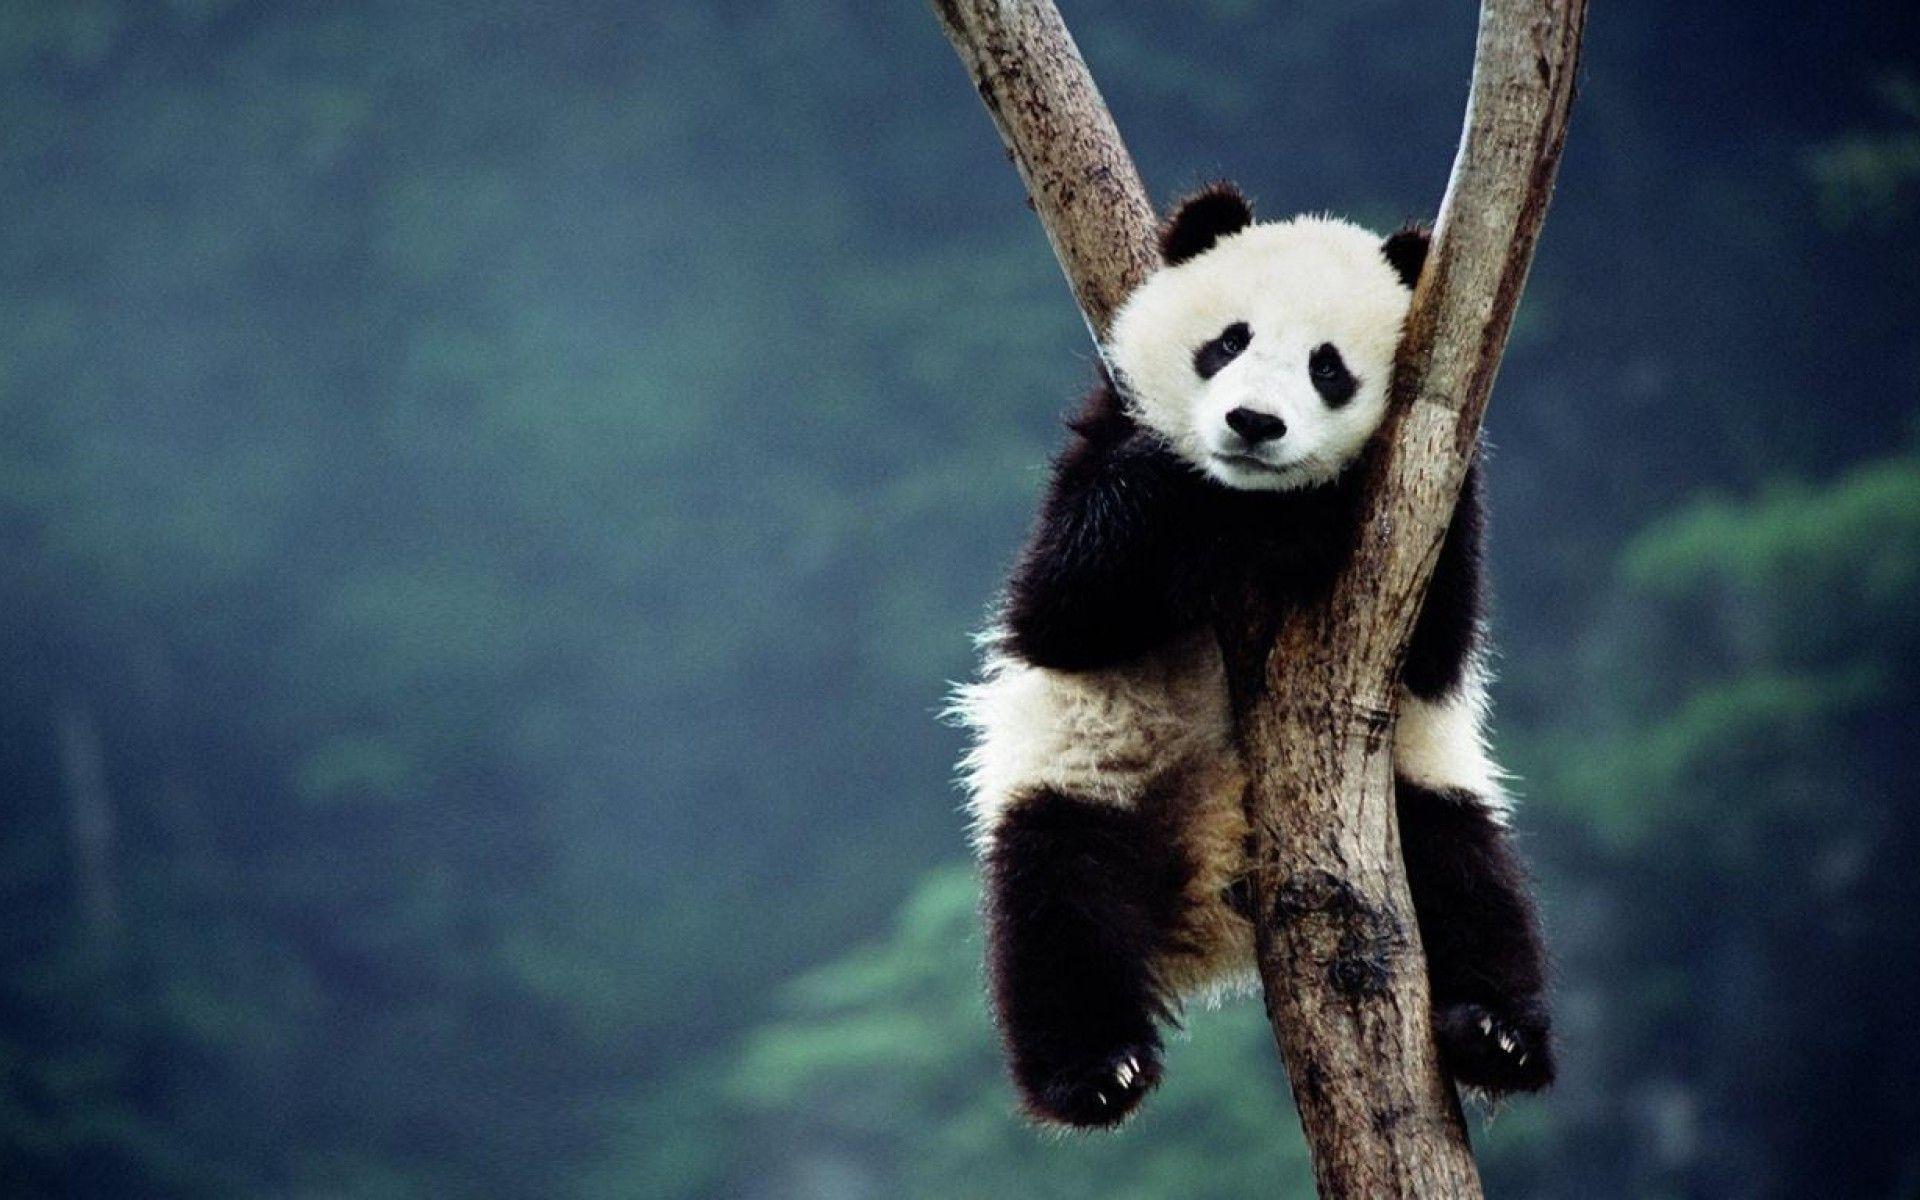 AmazingPict.com. Cute Panda Bears Wallpaper High Resolution